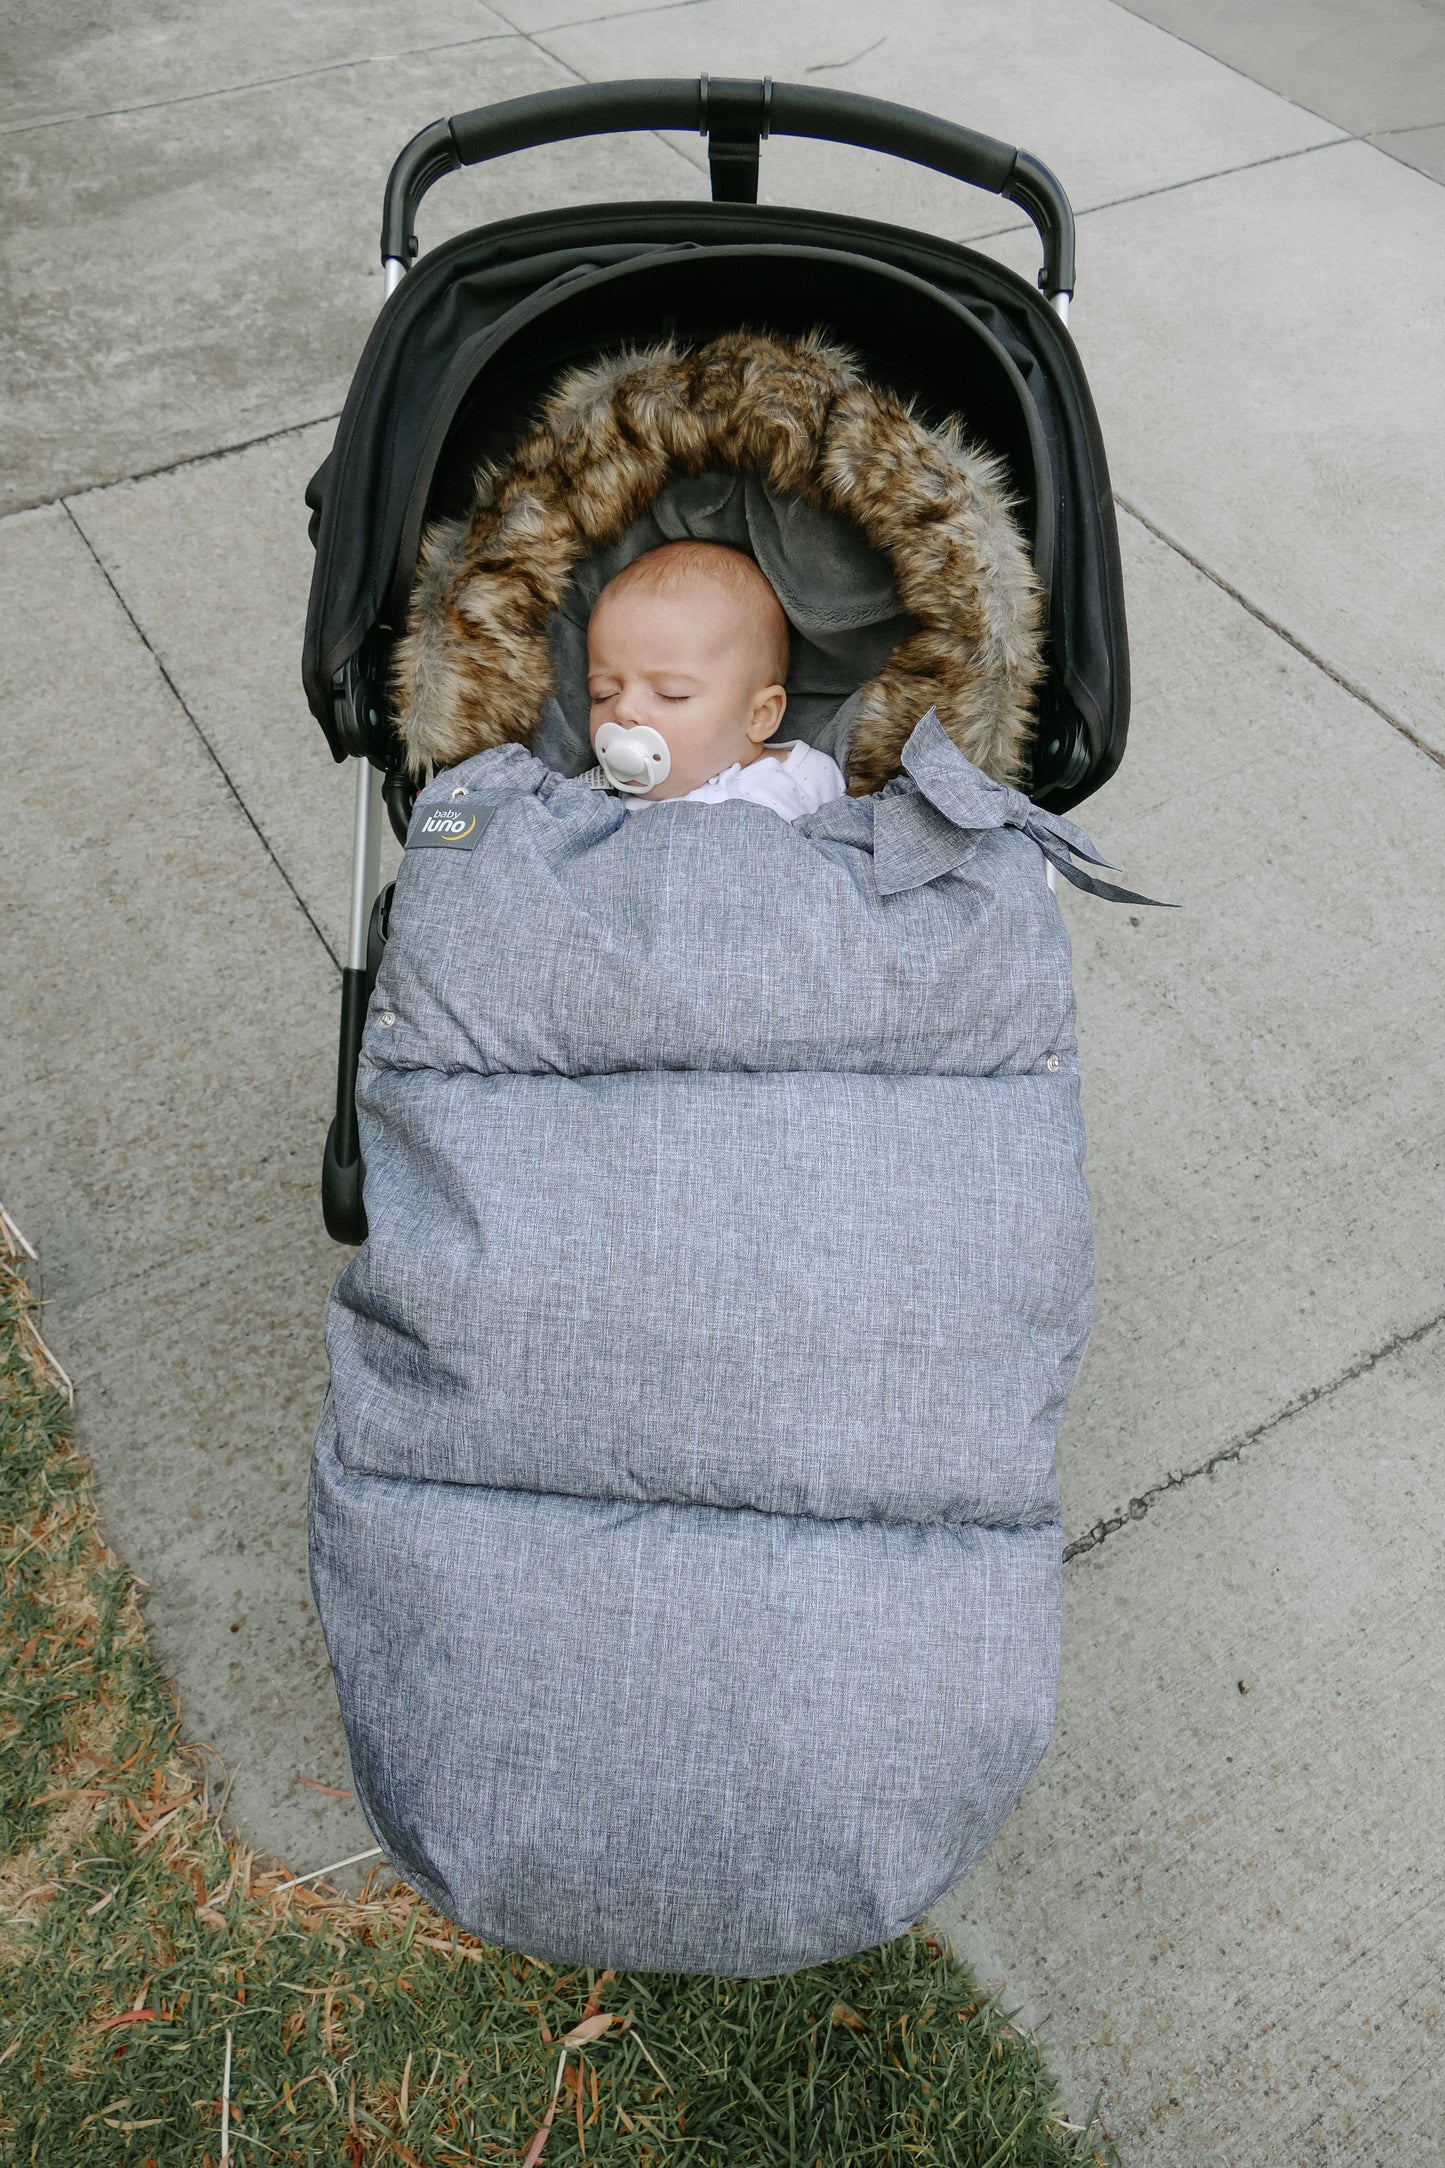 baby luno Nordic Footmuff Pram Liner - Chic Grey